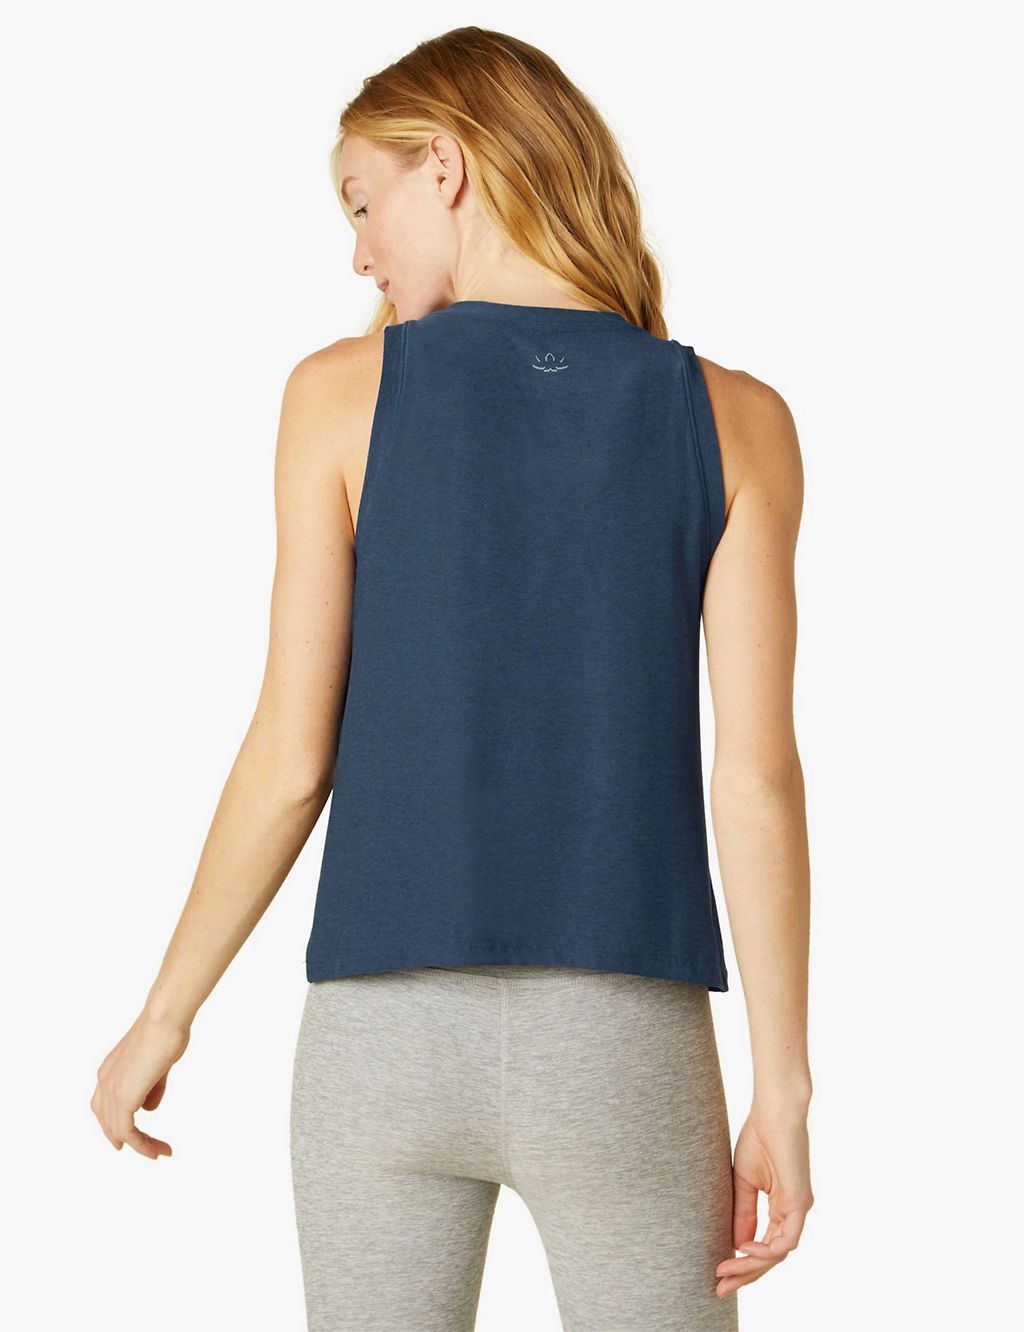 Featherweight Rebalance Yoga Vest Top